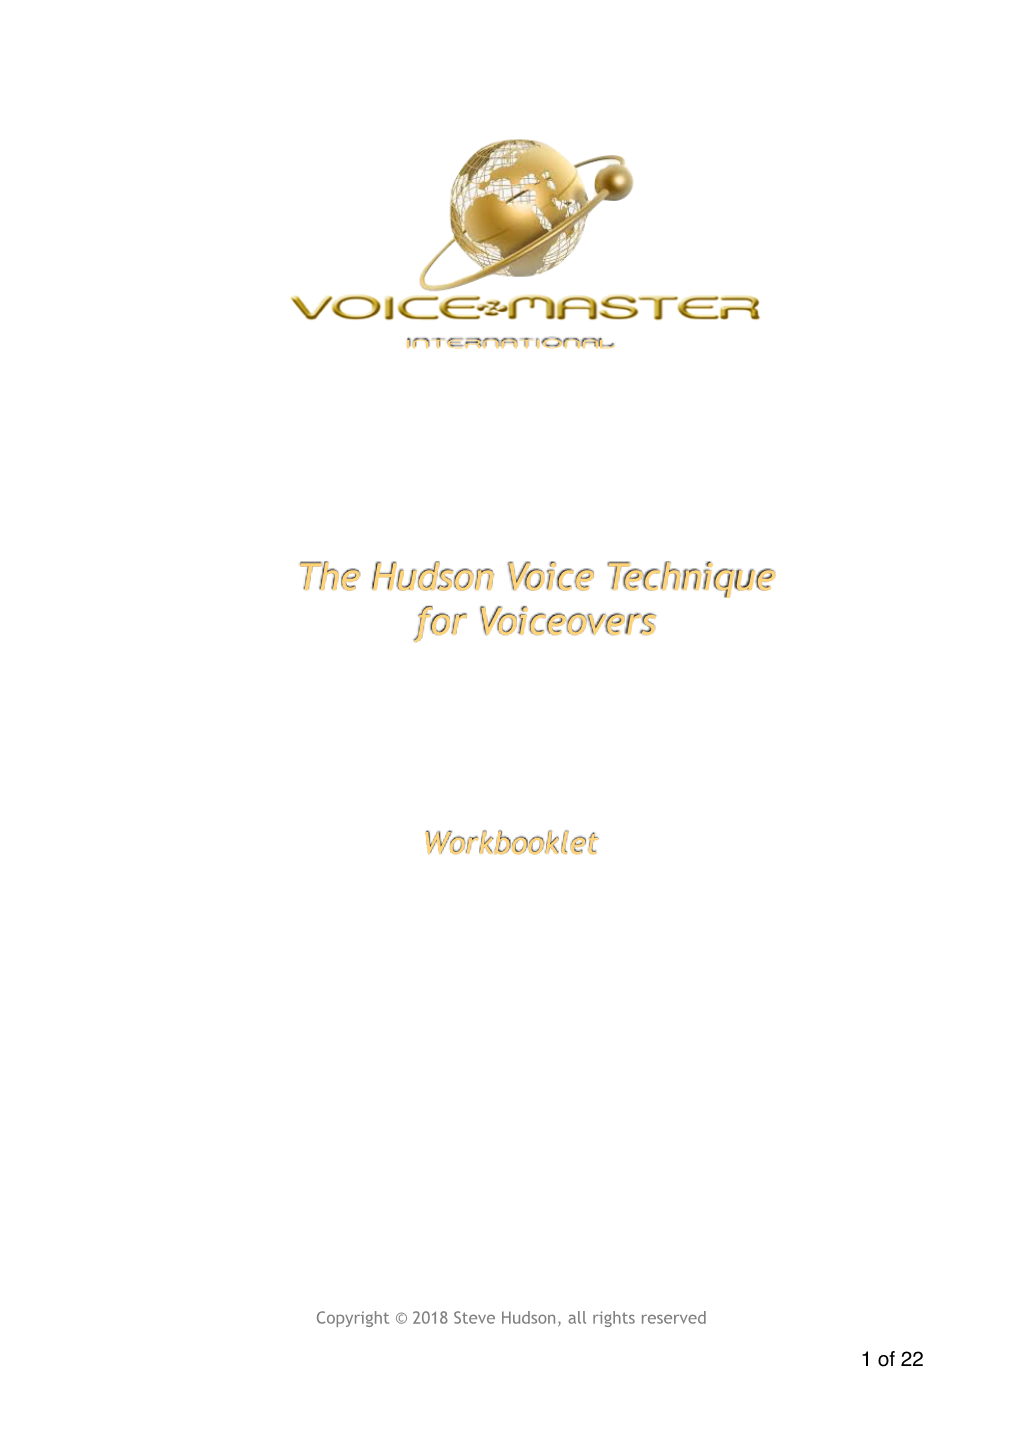 The Hudson Voice Technique for Voiceovers